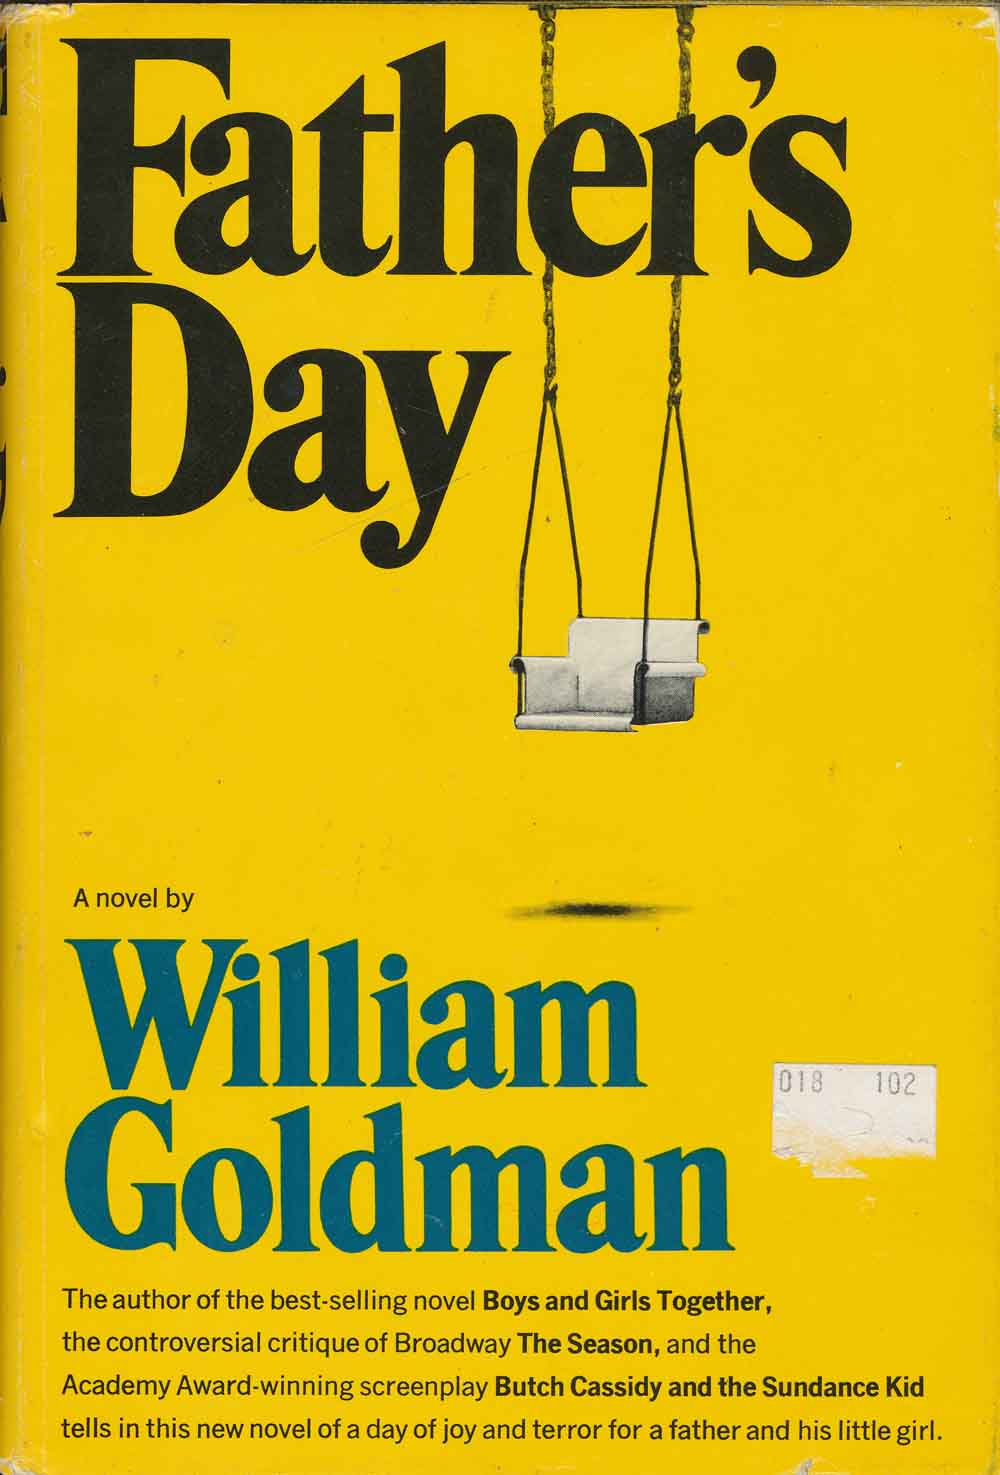 GOLDMAN, WILLIAM - Father's Day